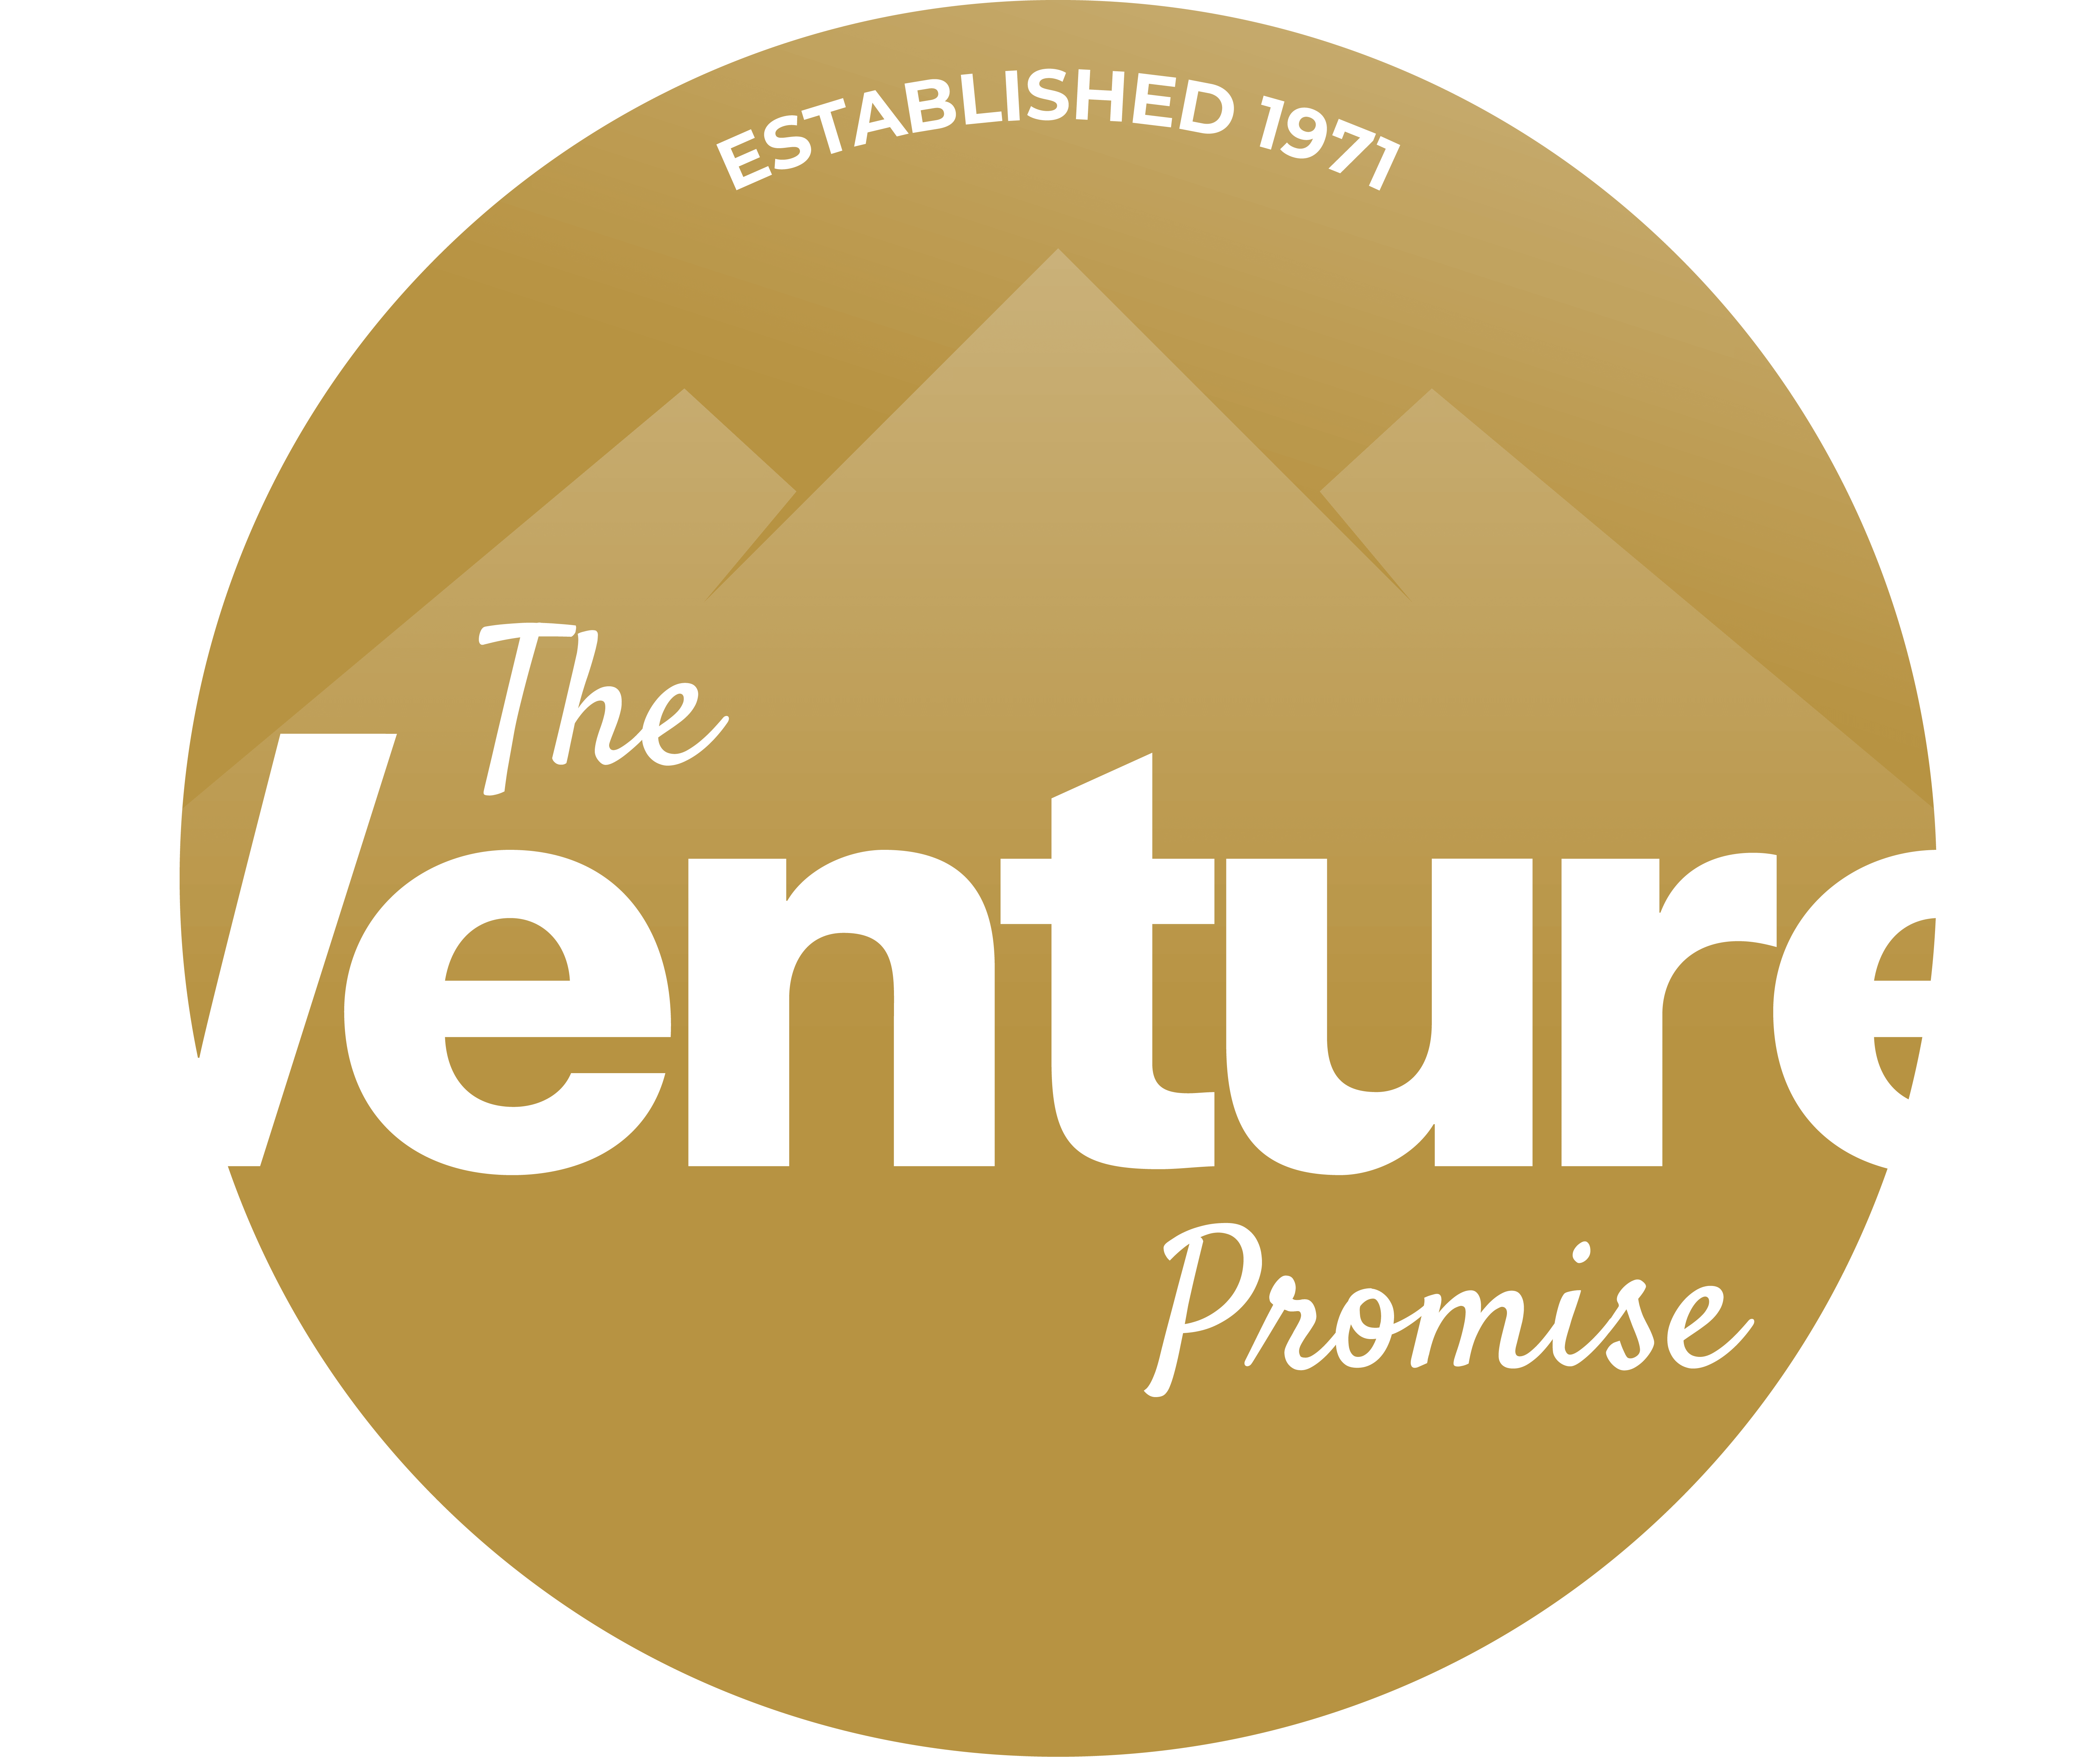 Venture 50 Years Celebration